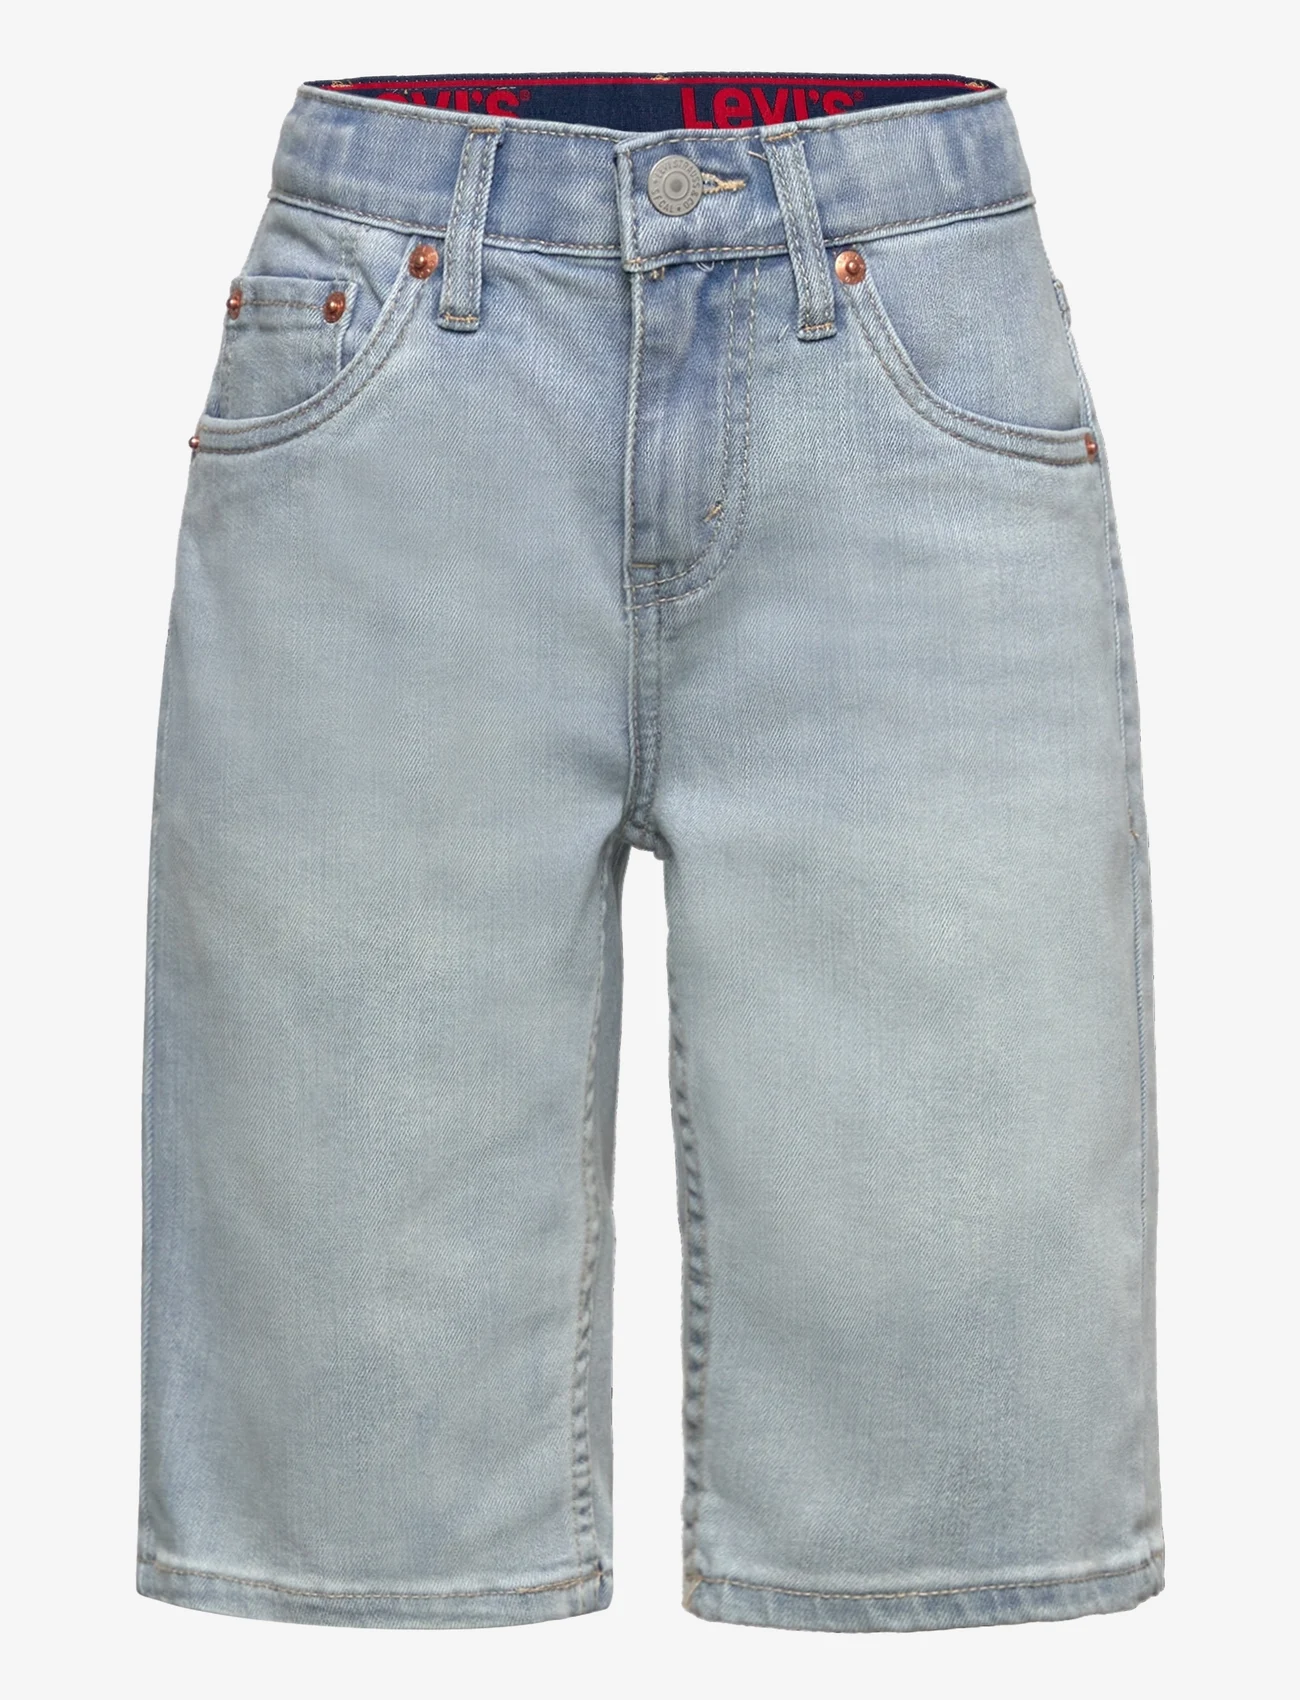 Levi's - Levi's Slim Fit Performance Shorts - jeansshorts - blue - 0